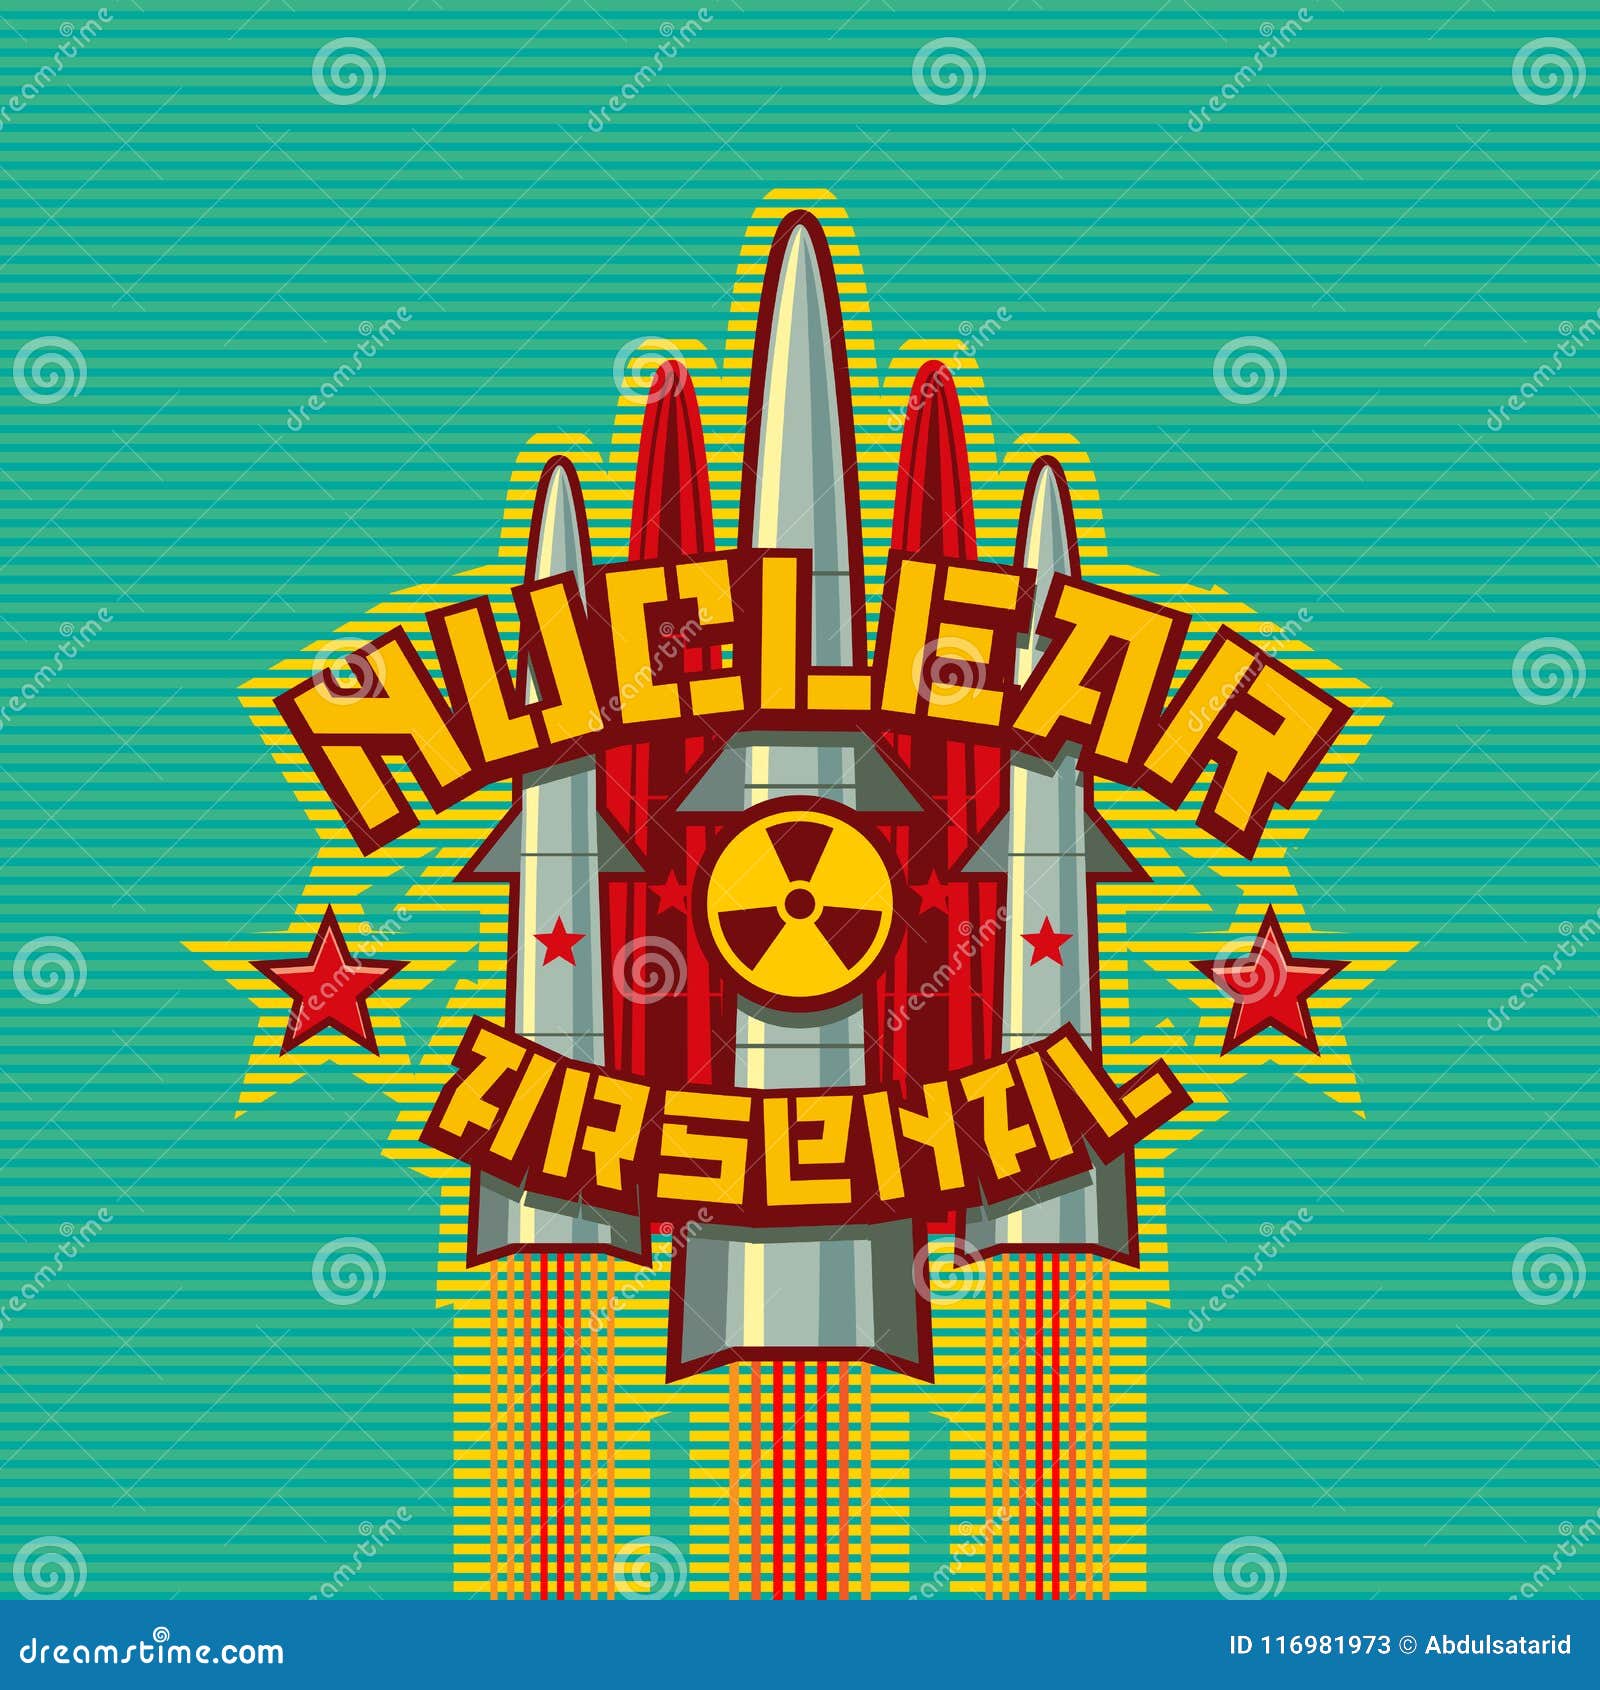 nuclear arsenal 